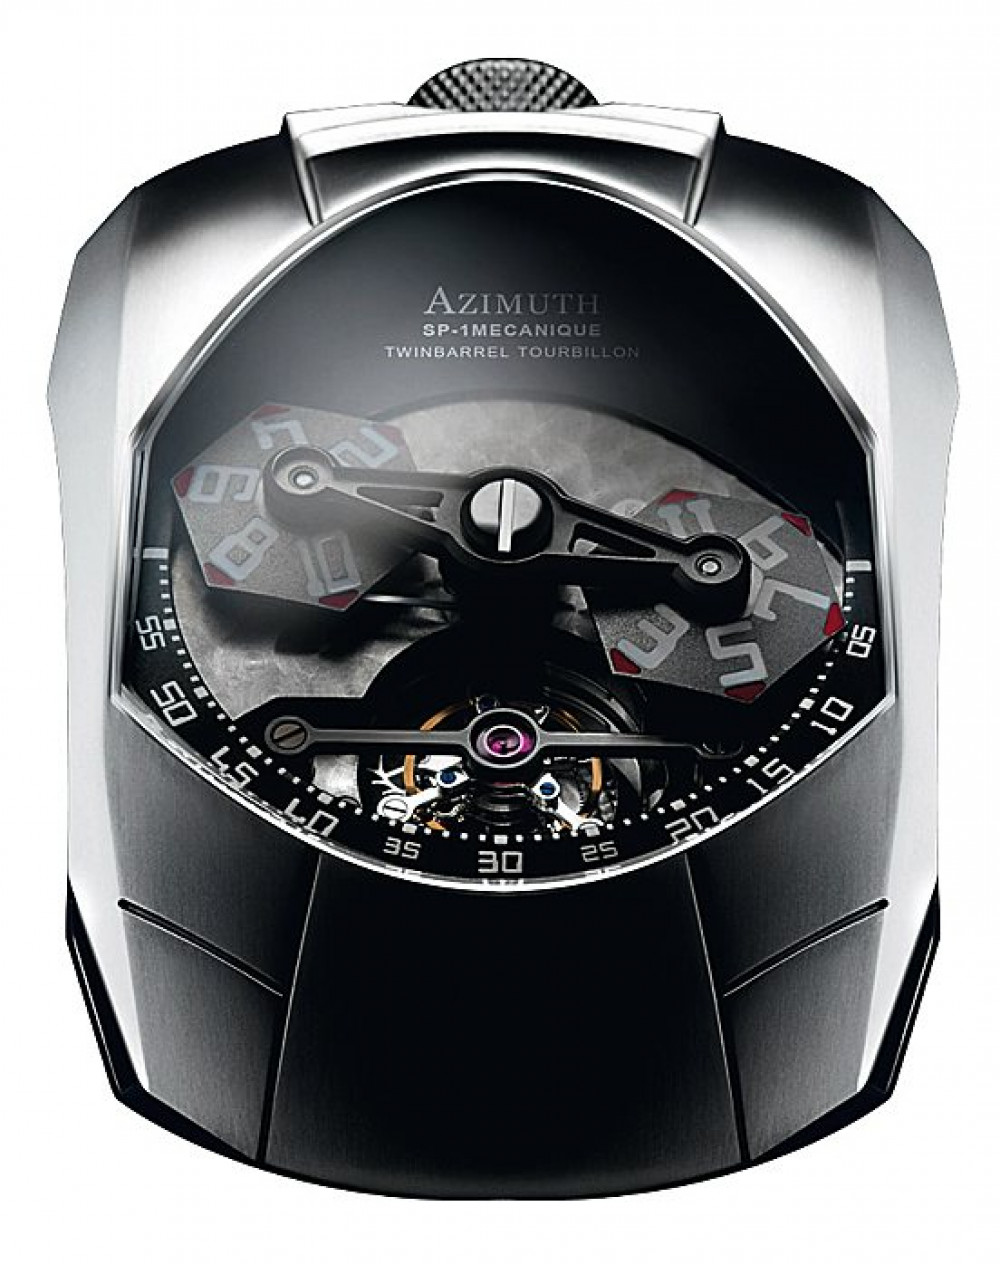 Zegarek firmy Azimuth, model SP-1 Twin Barrel Tourbillon